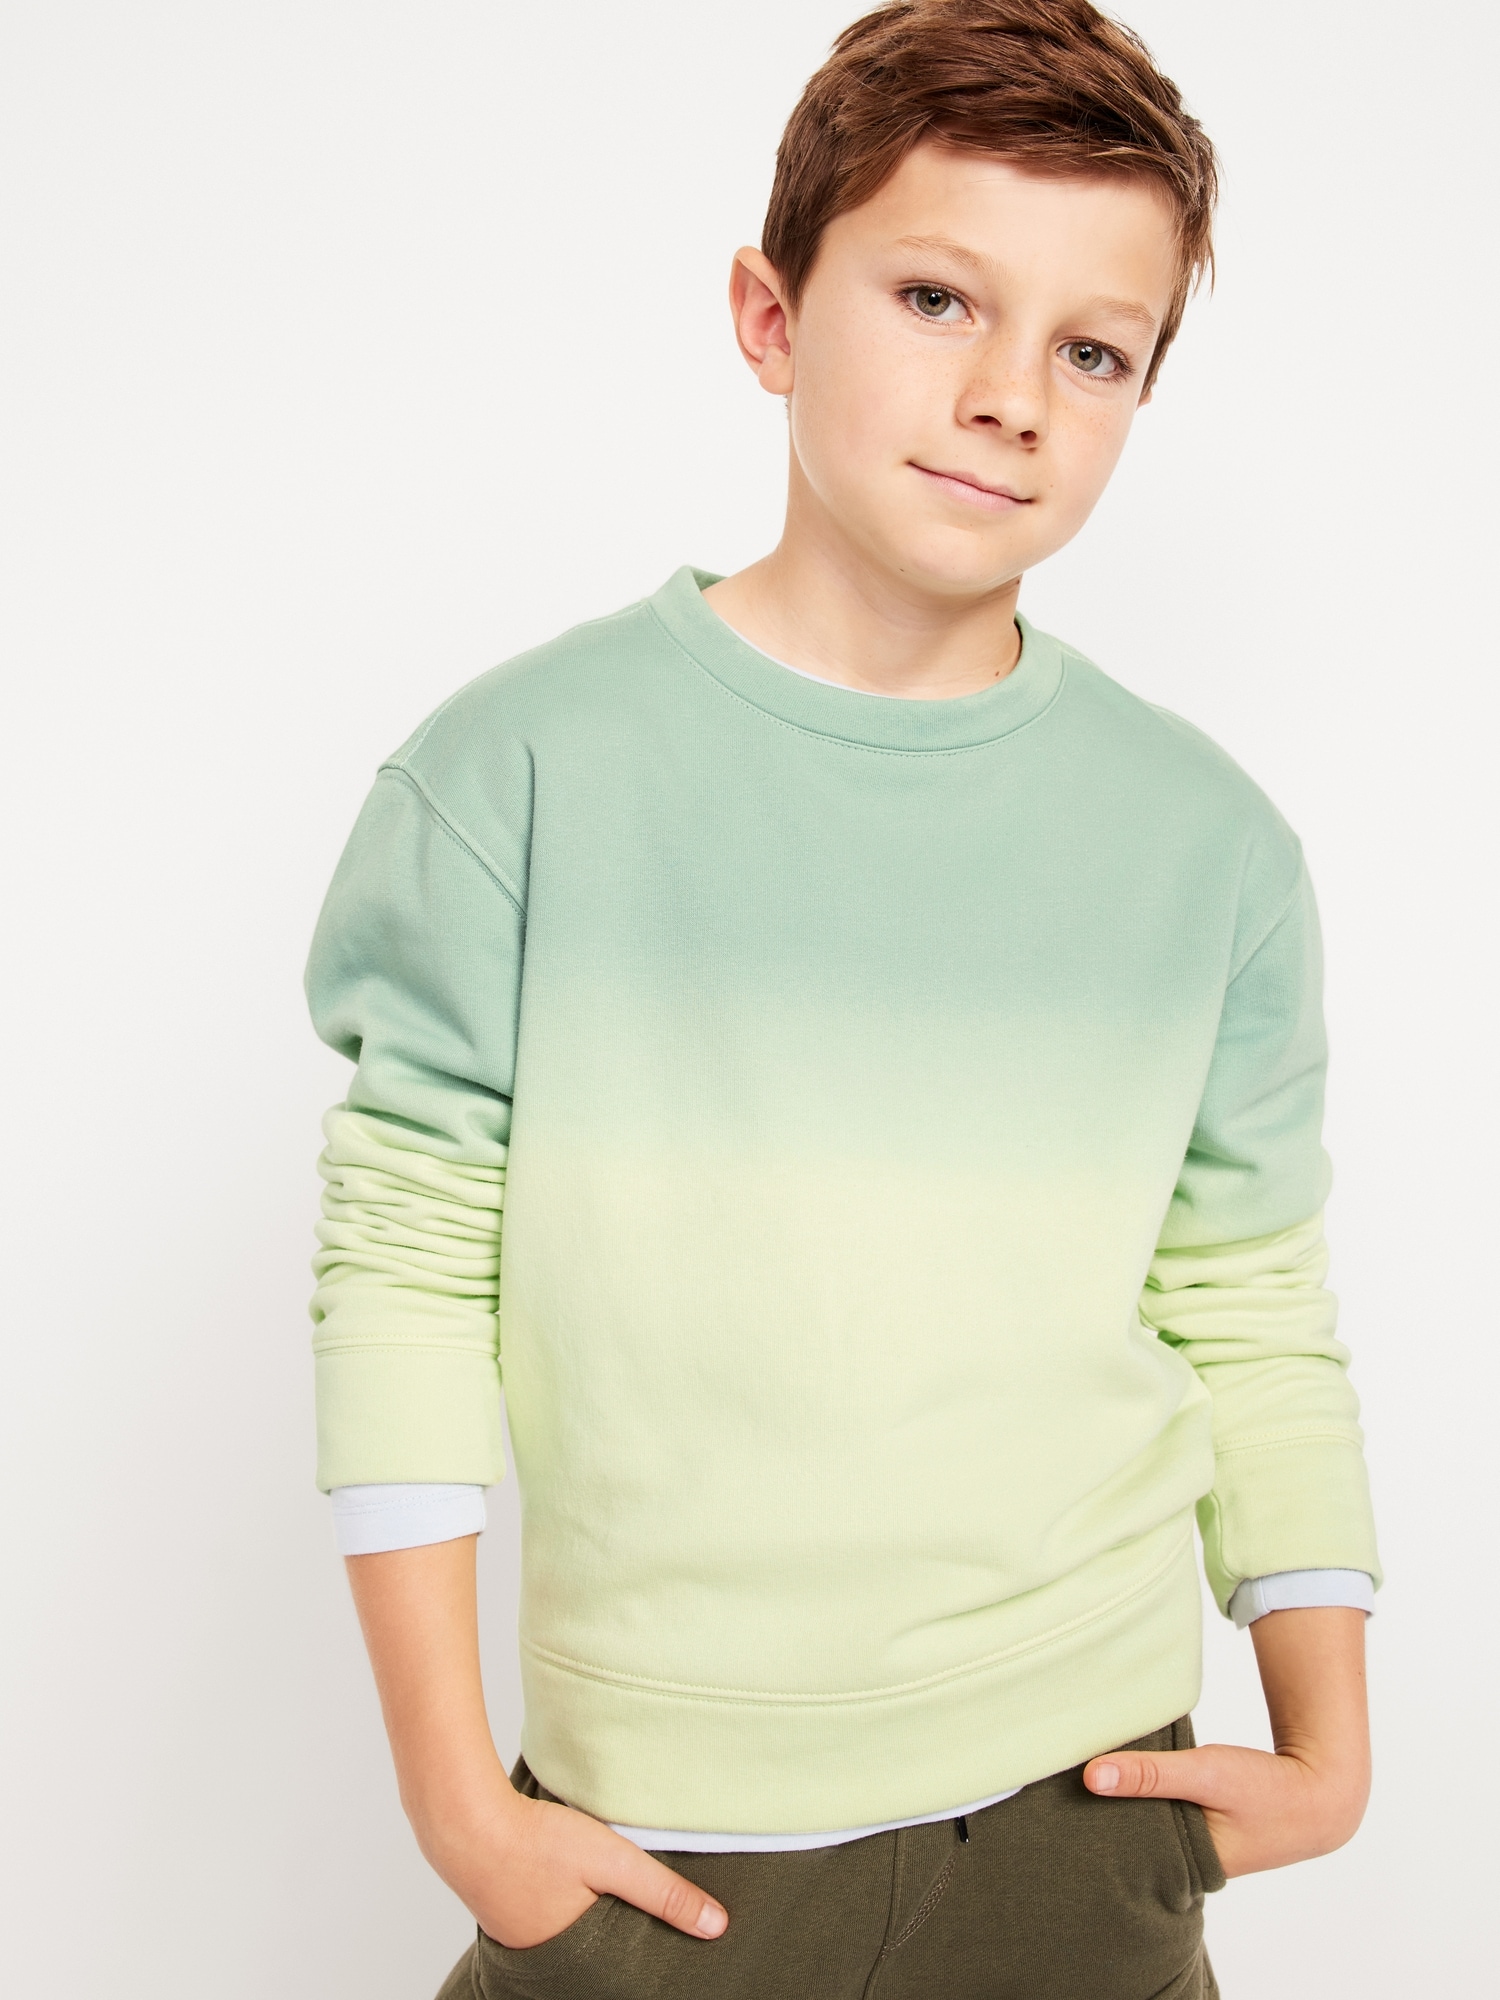 Long-Sleeve Crew-Neck Sweatshirt for Boys Hot Deal